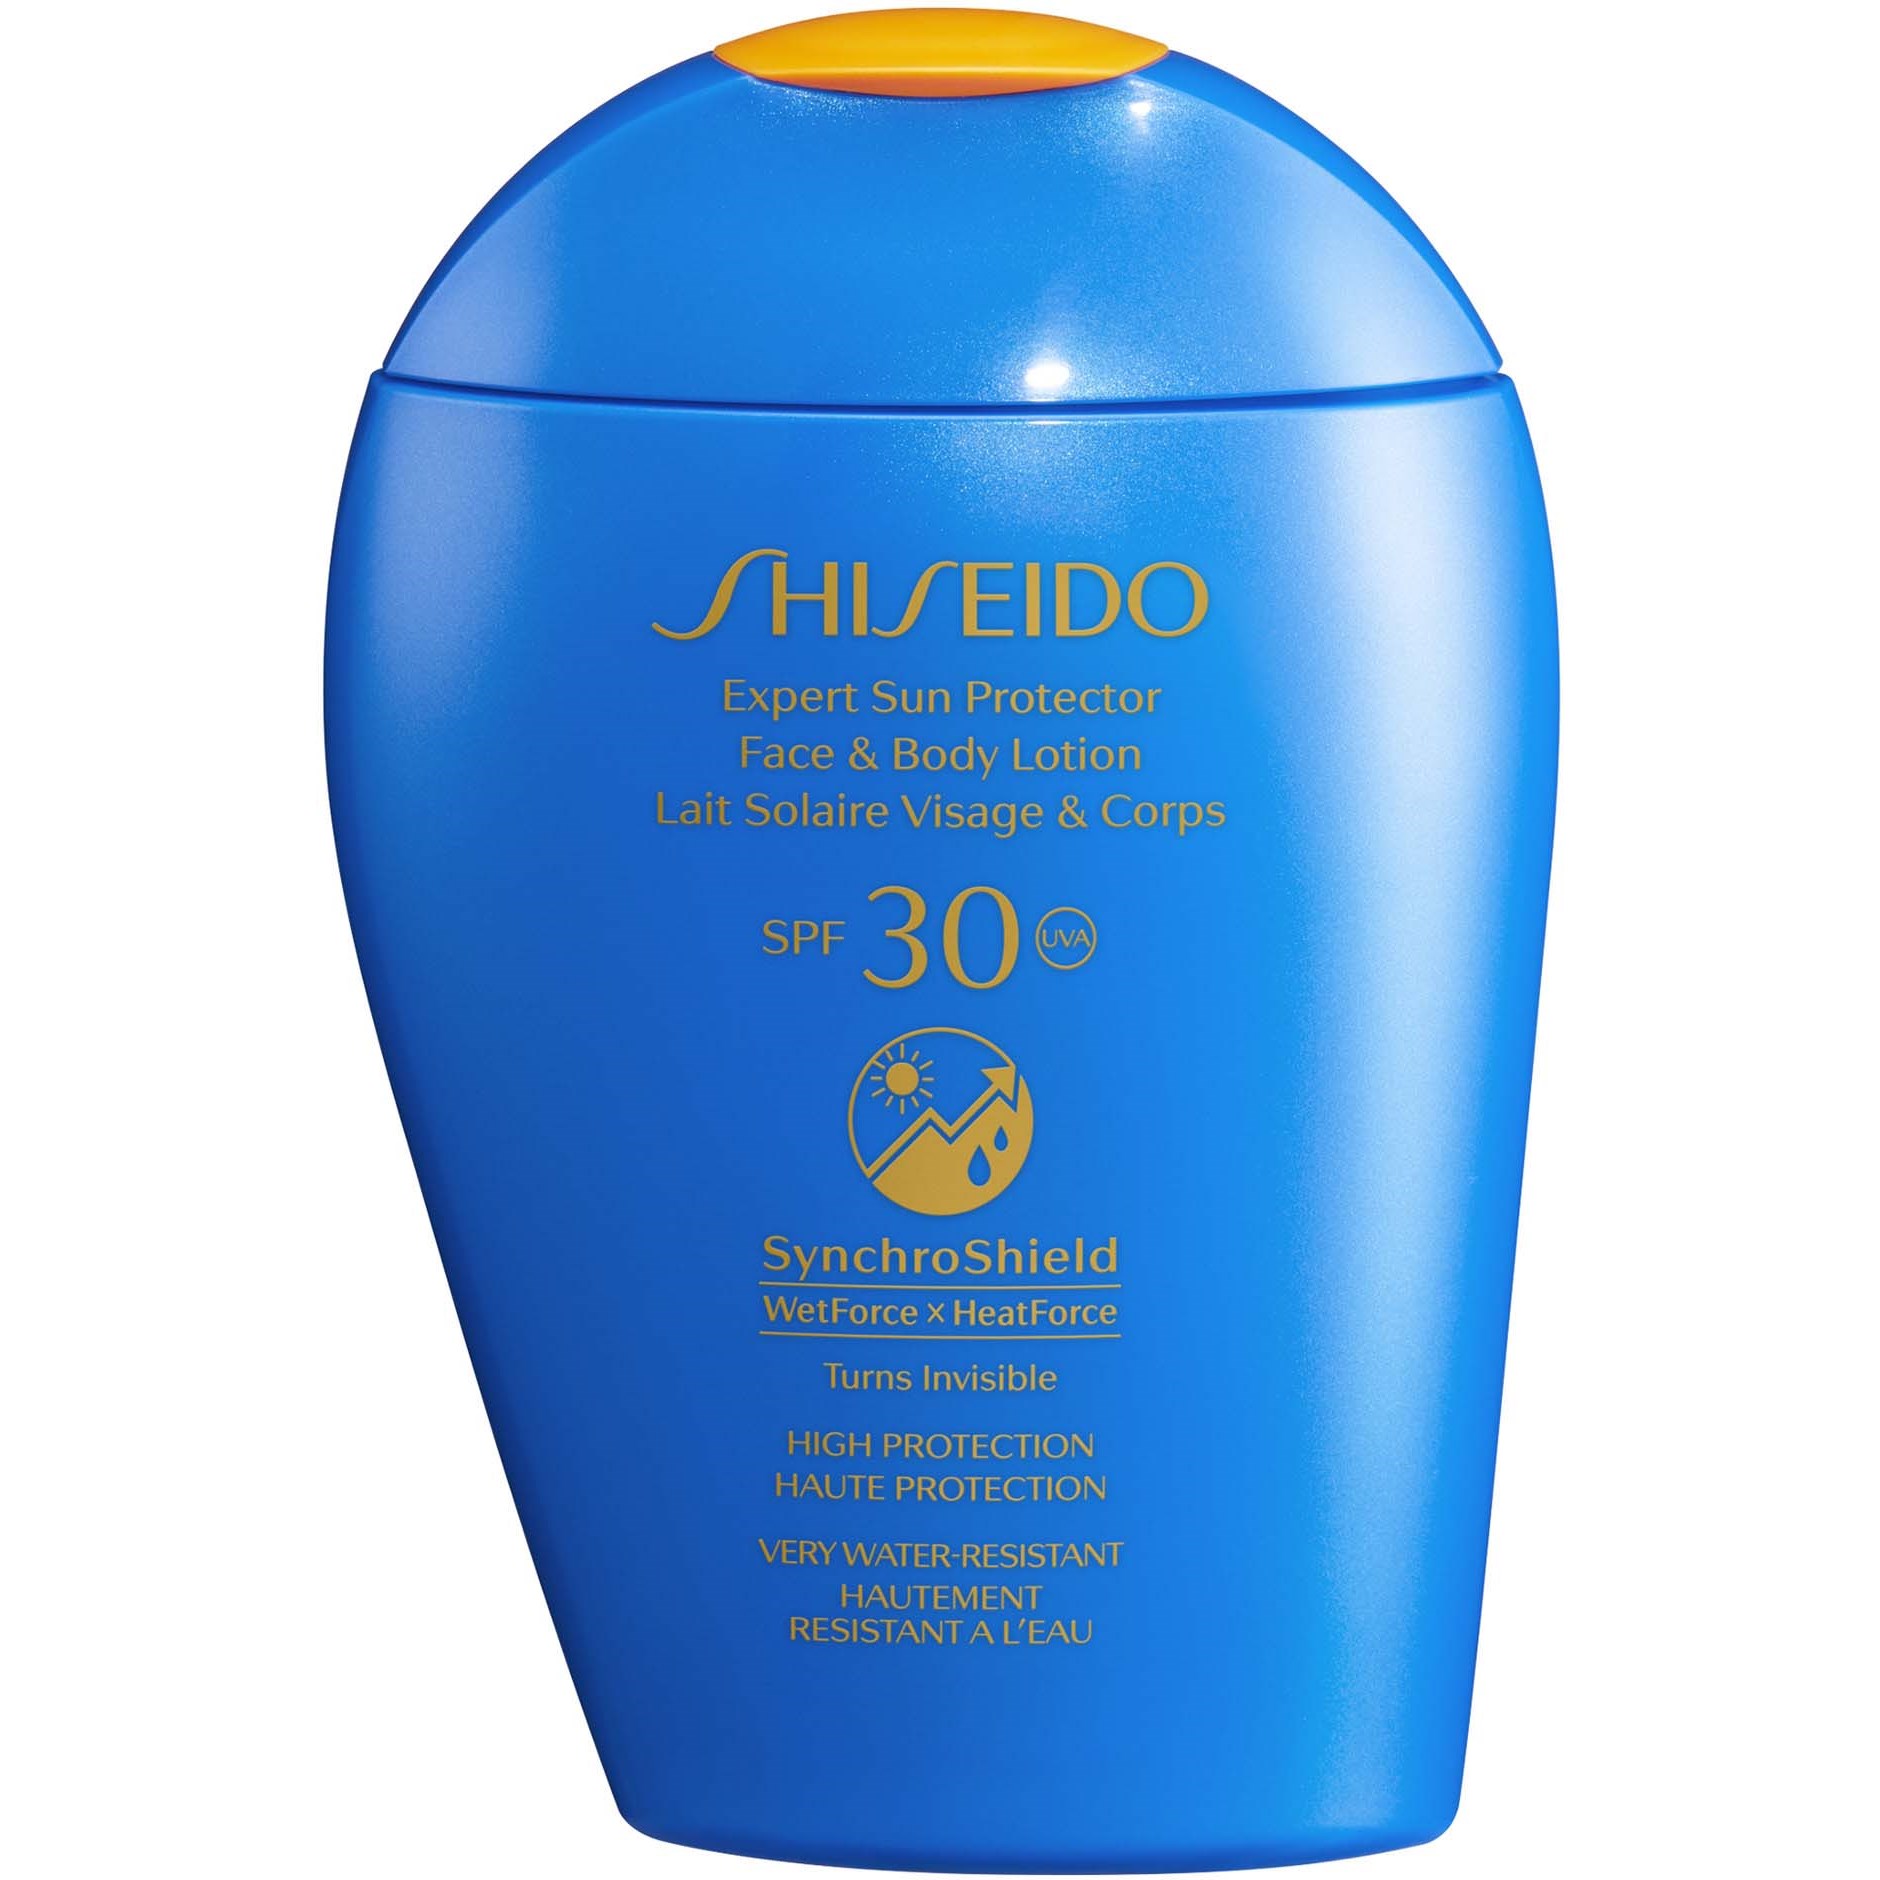 Shiseido Sun 30+ experts pro lotion